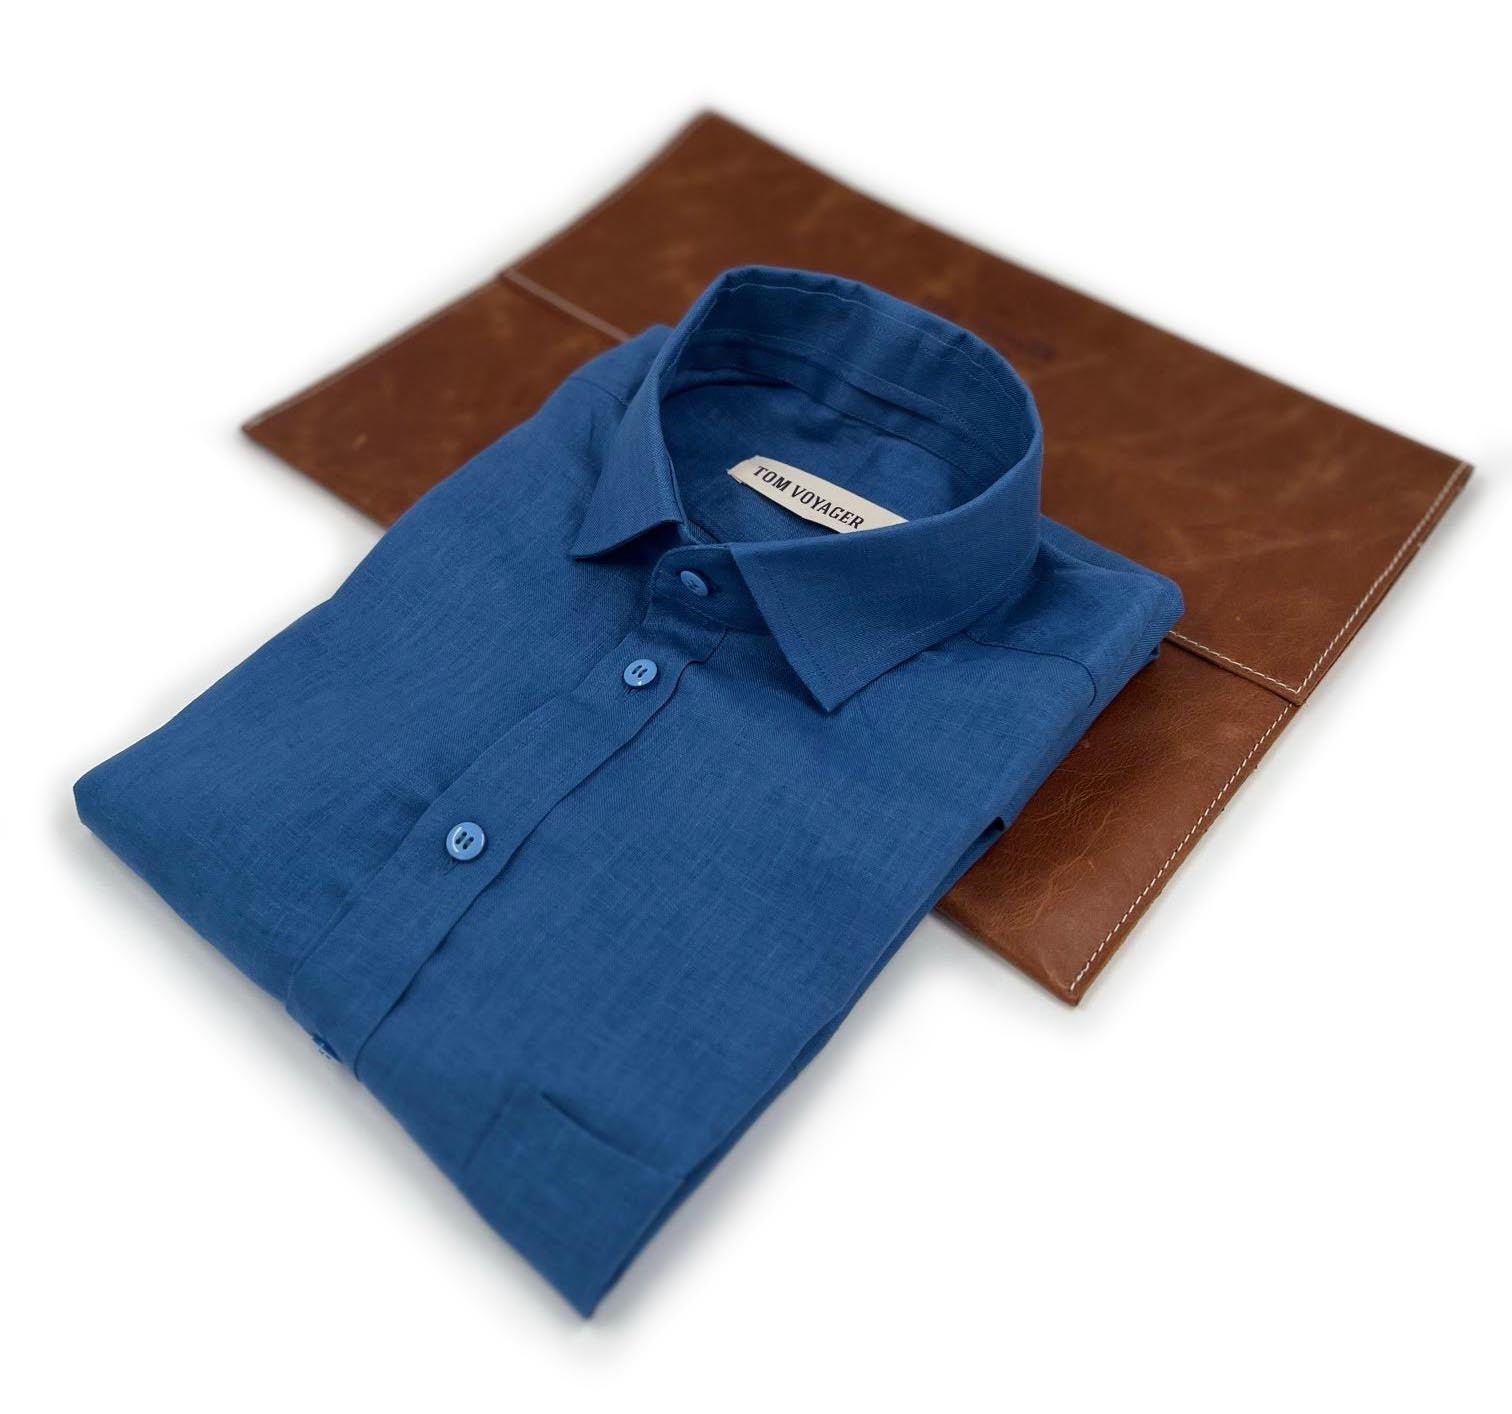 Athens Linen Shirt - Mens Shirt - Short Sleeve Shirt - Blue - Fold up - Tom Voyager